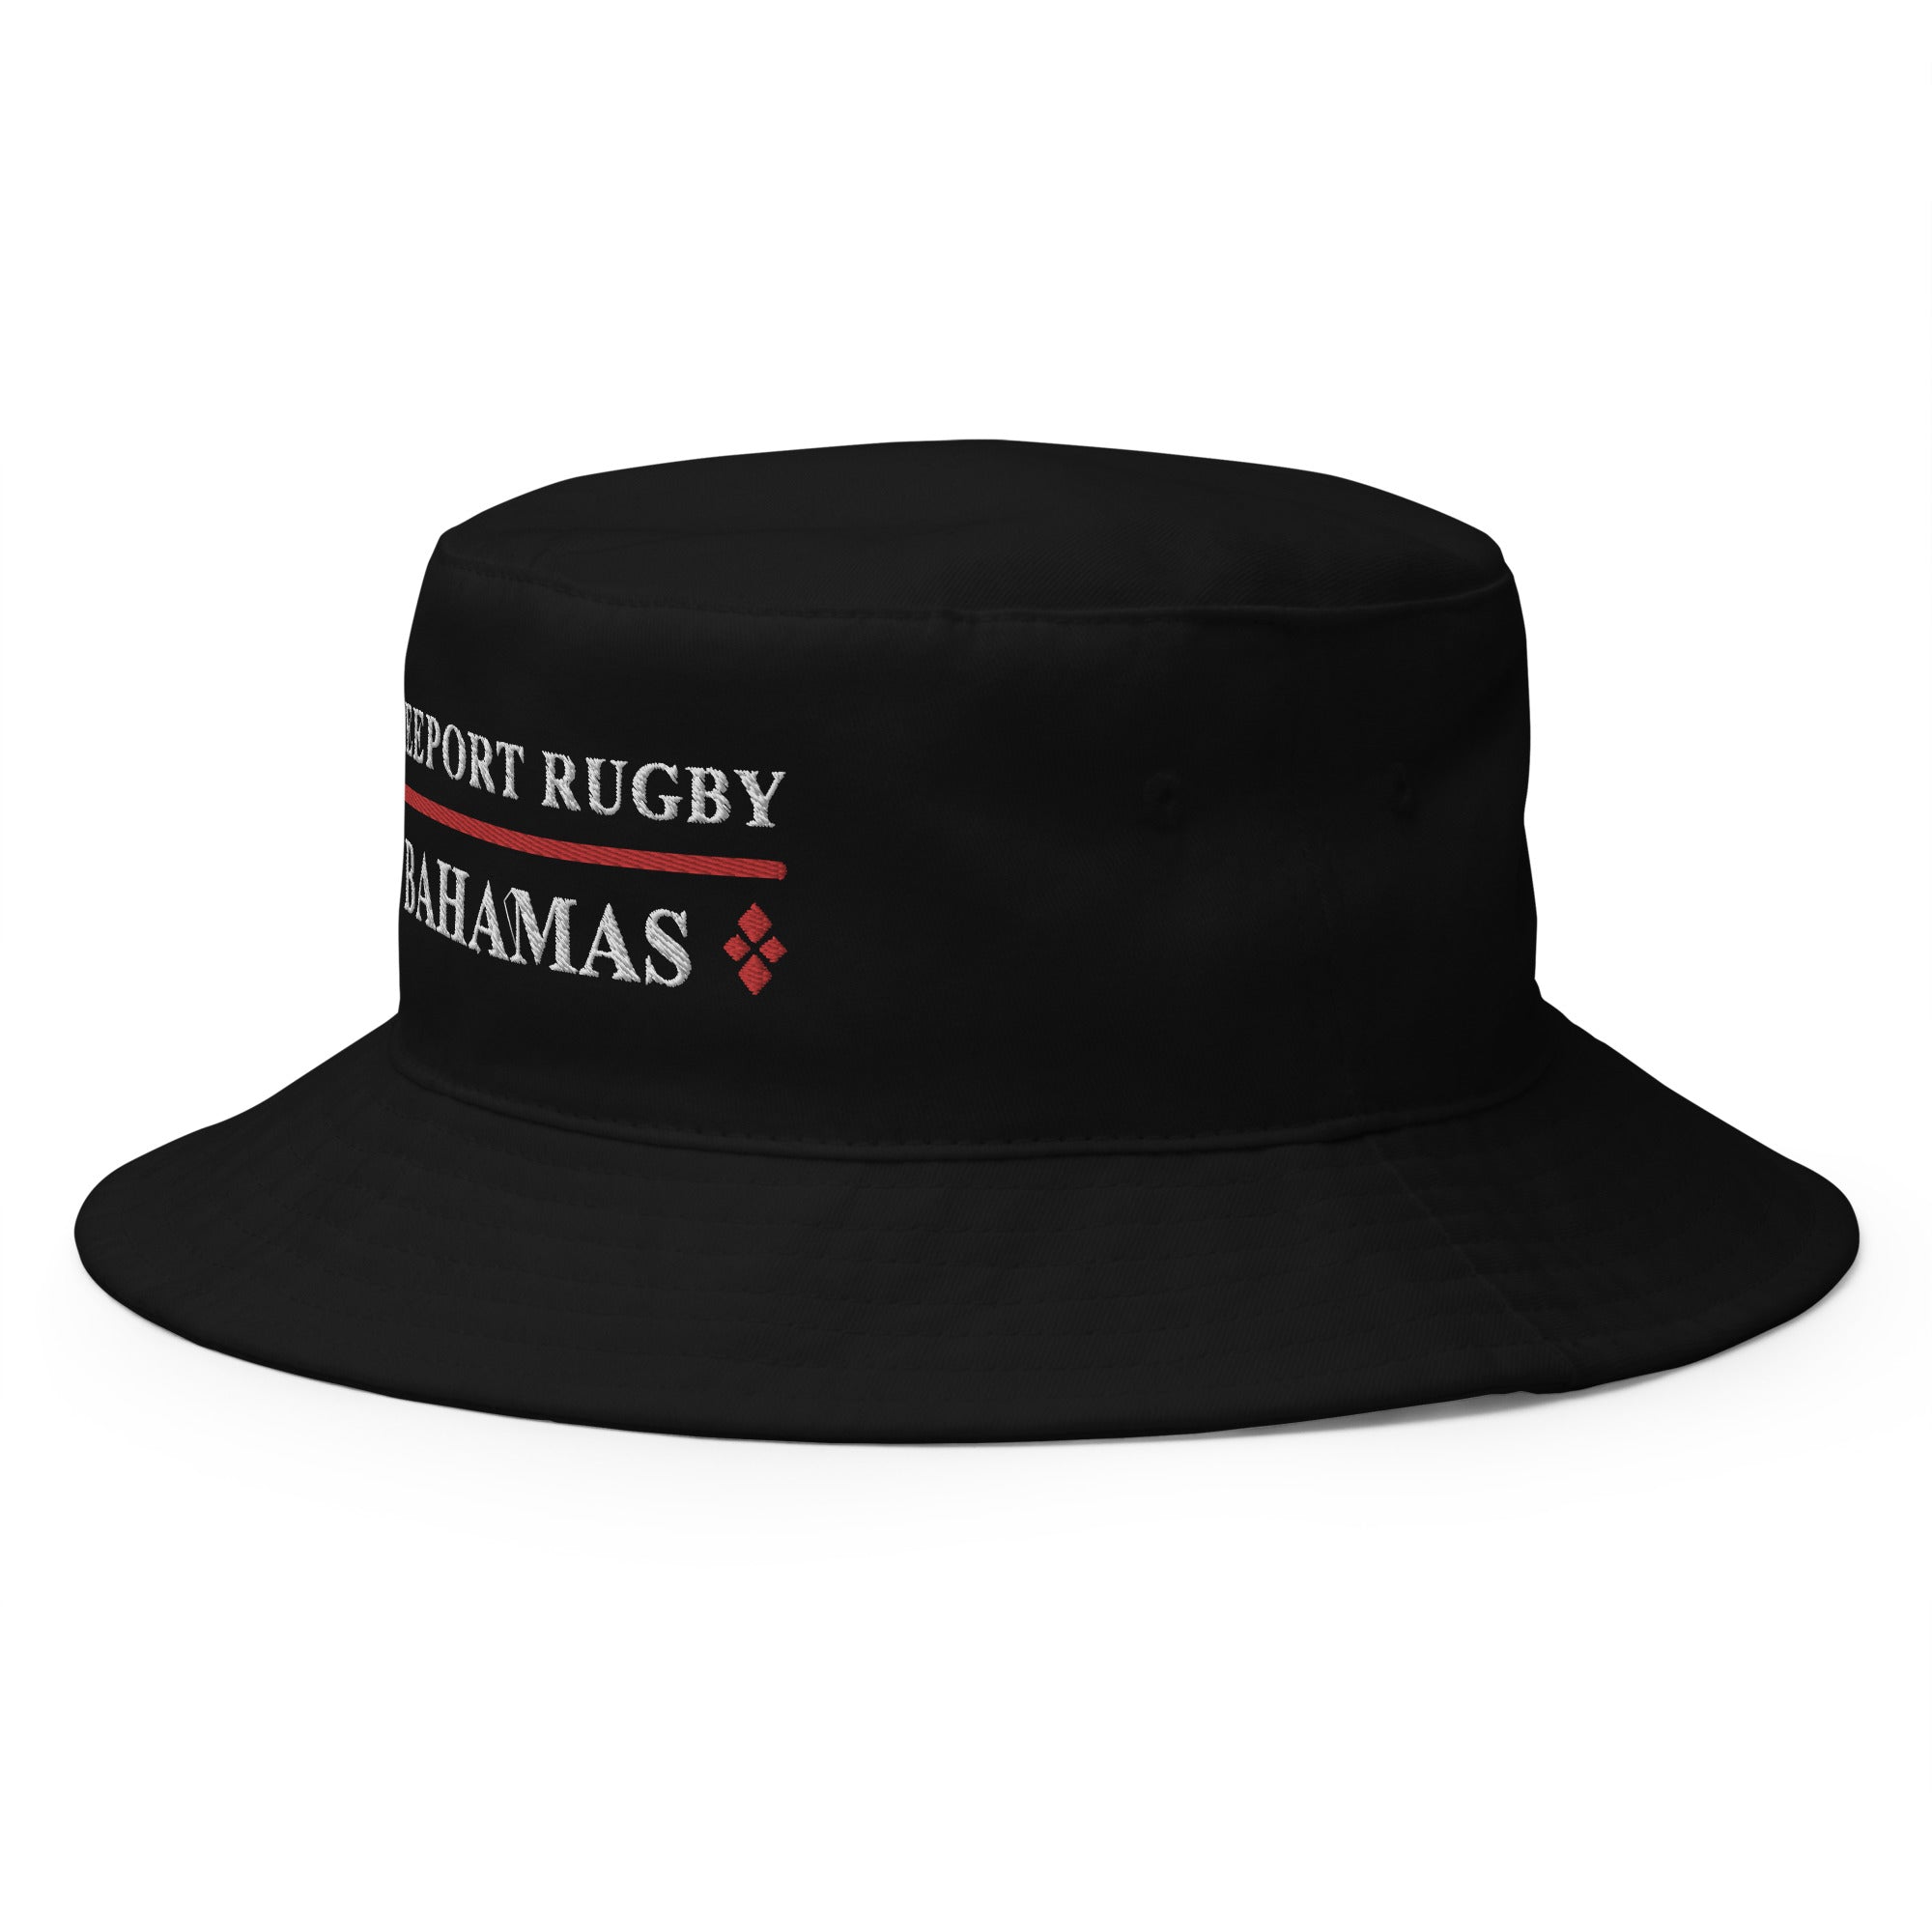 Rugby Imports Freeport RFC Bucket Hat